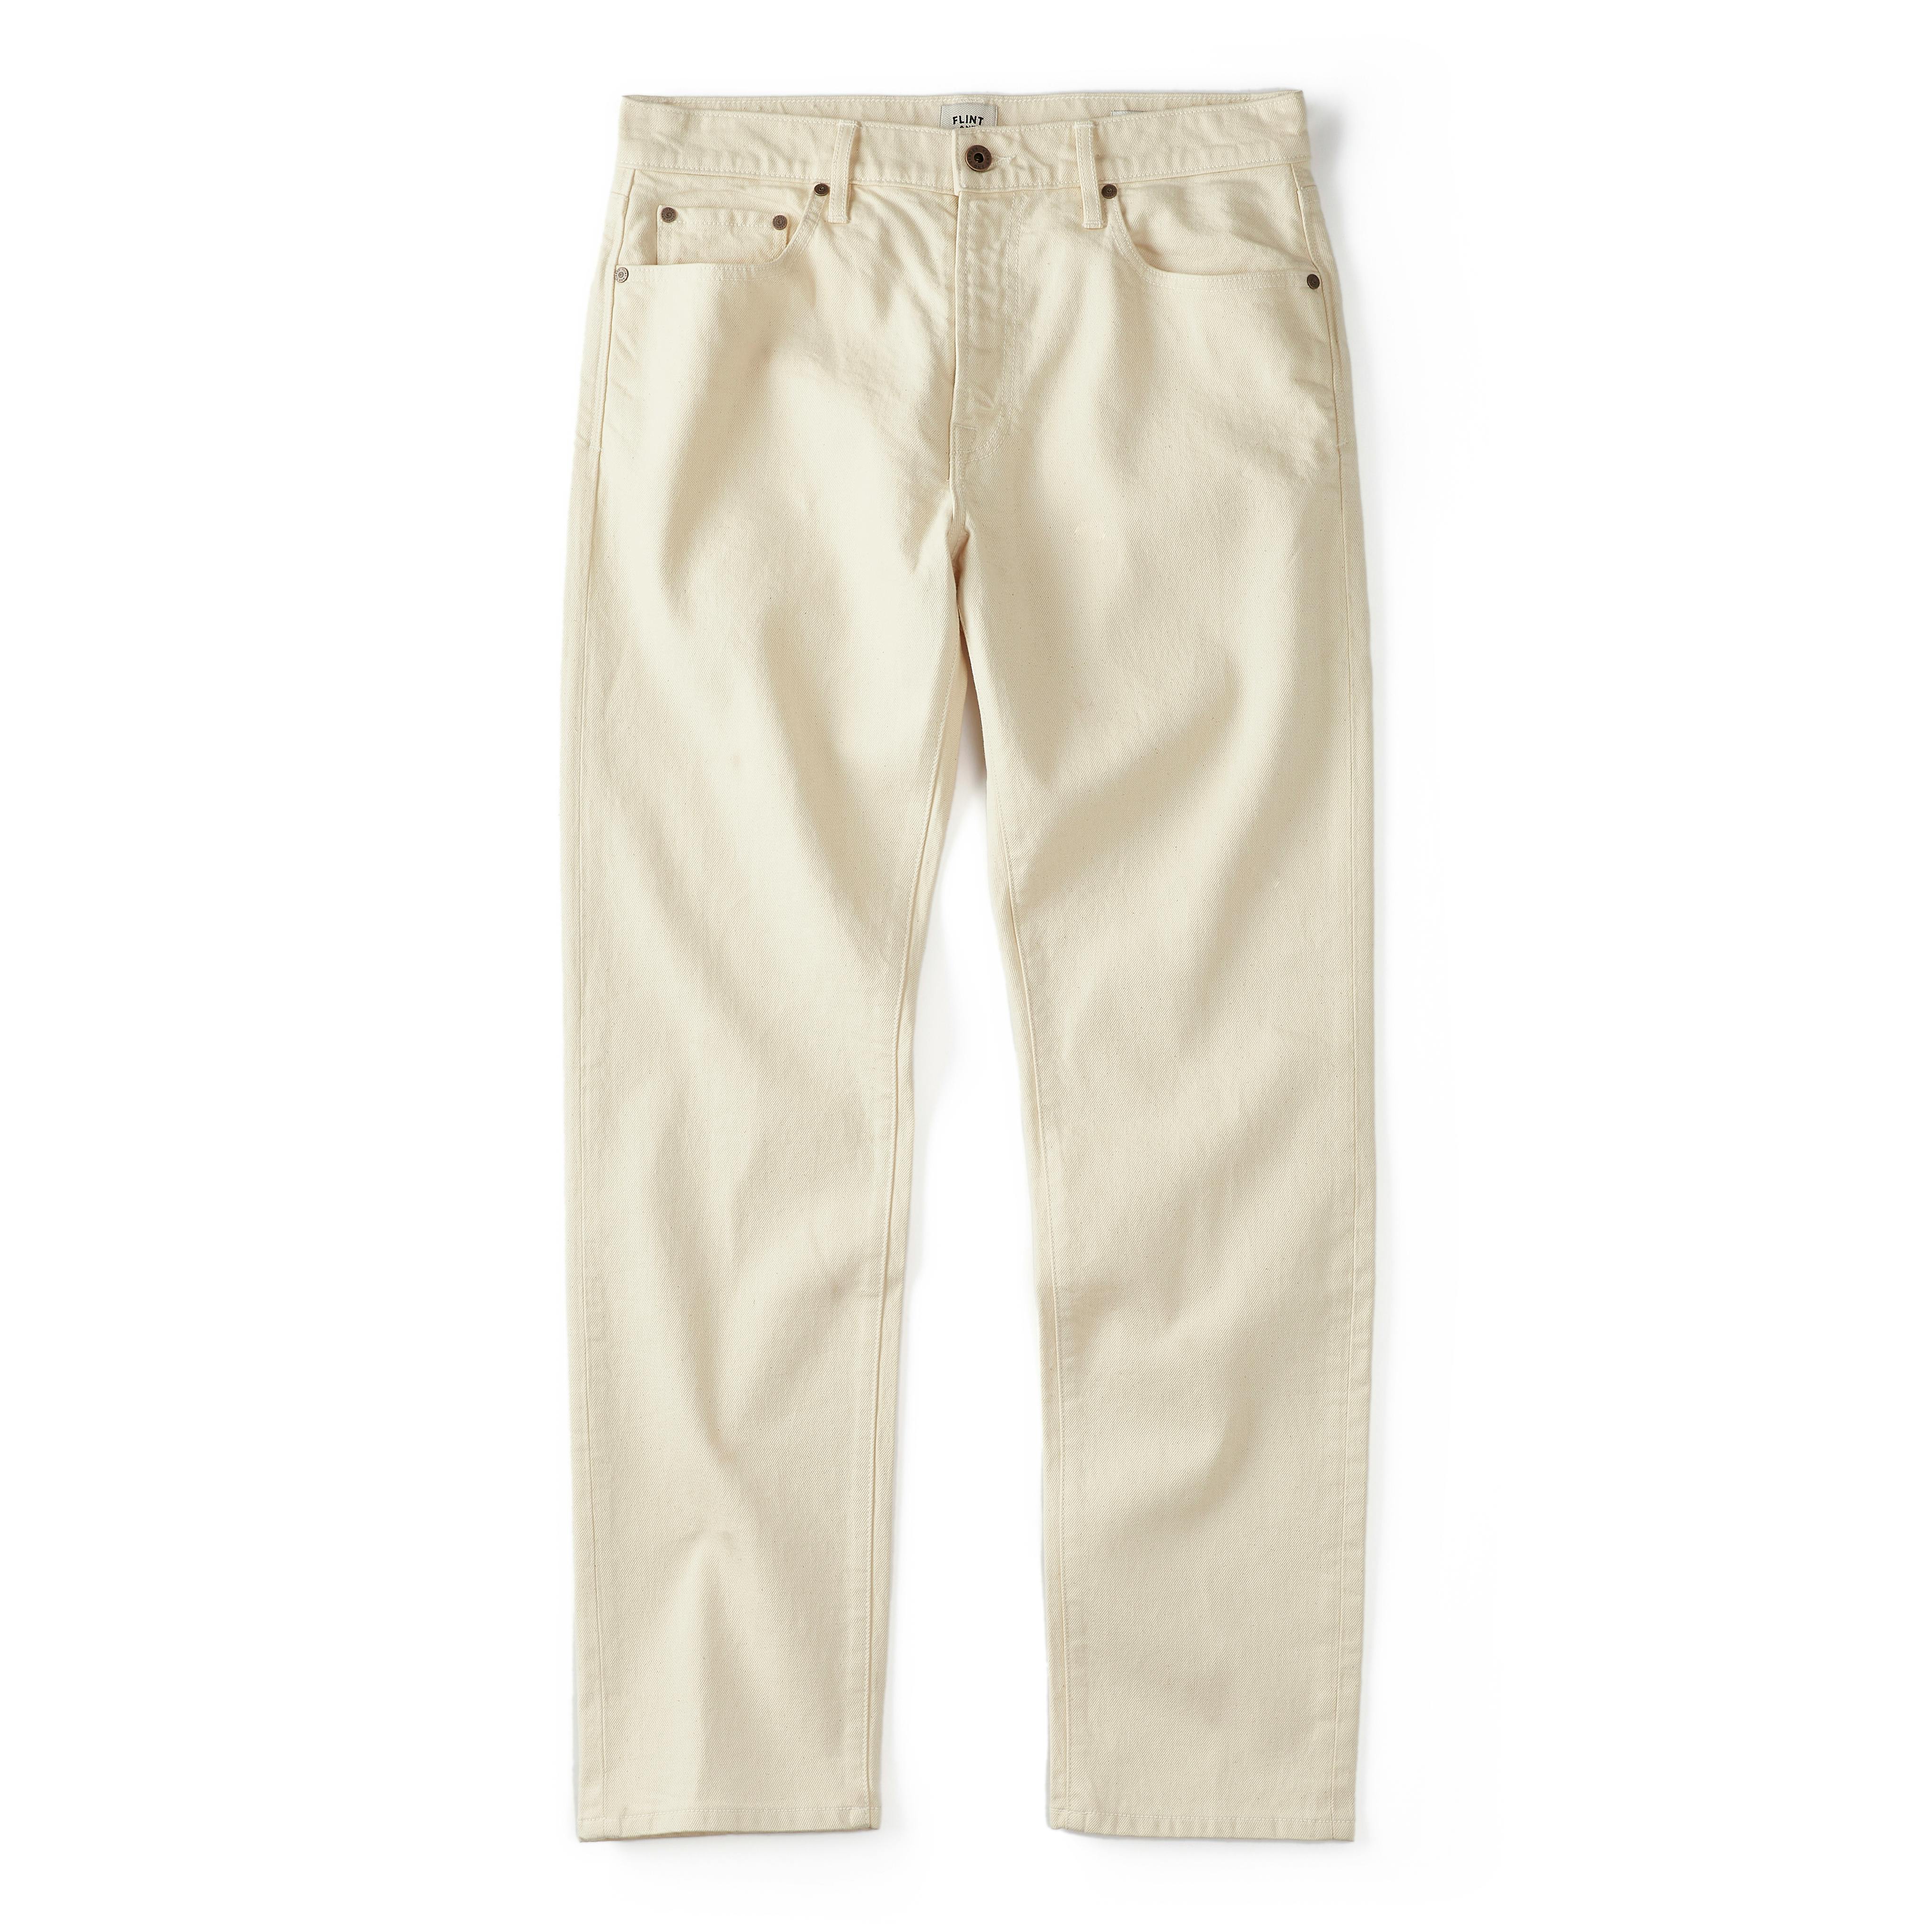 Boys Corduroy Pants - Soft Cord Stretch Pants - City Threads USA